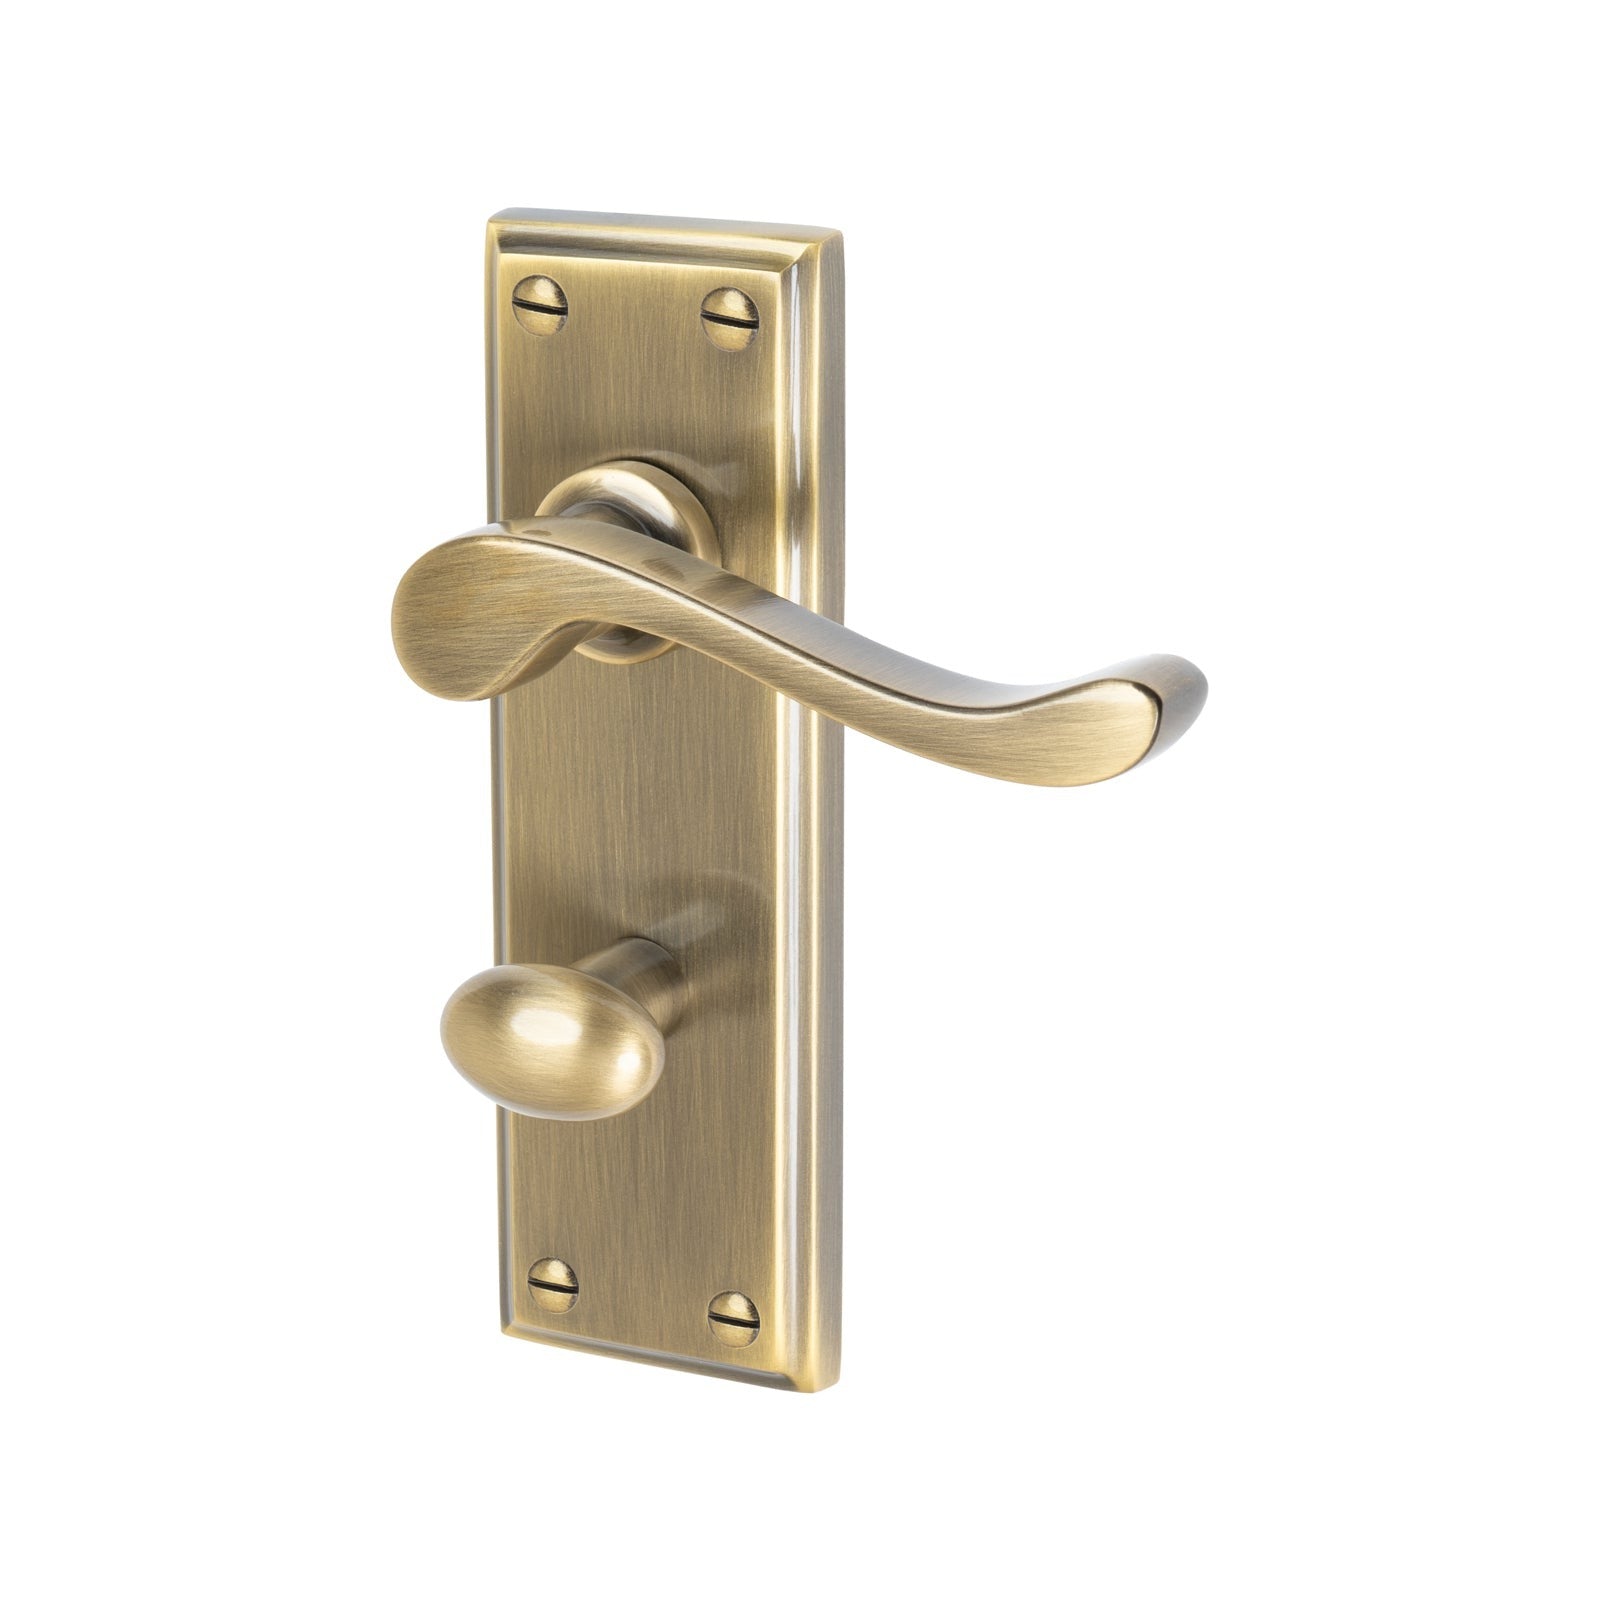 Edwardian Door Handles On Plate Bathroom Handle in Aged Brass